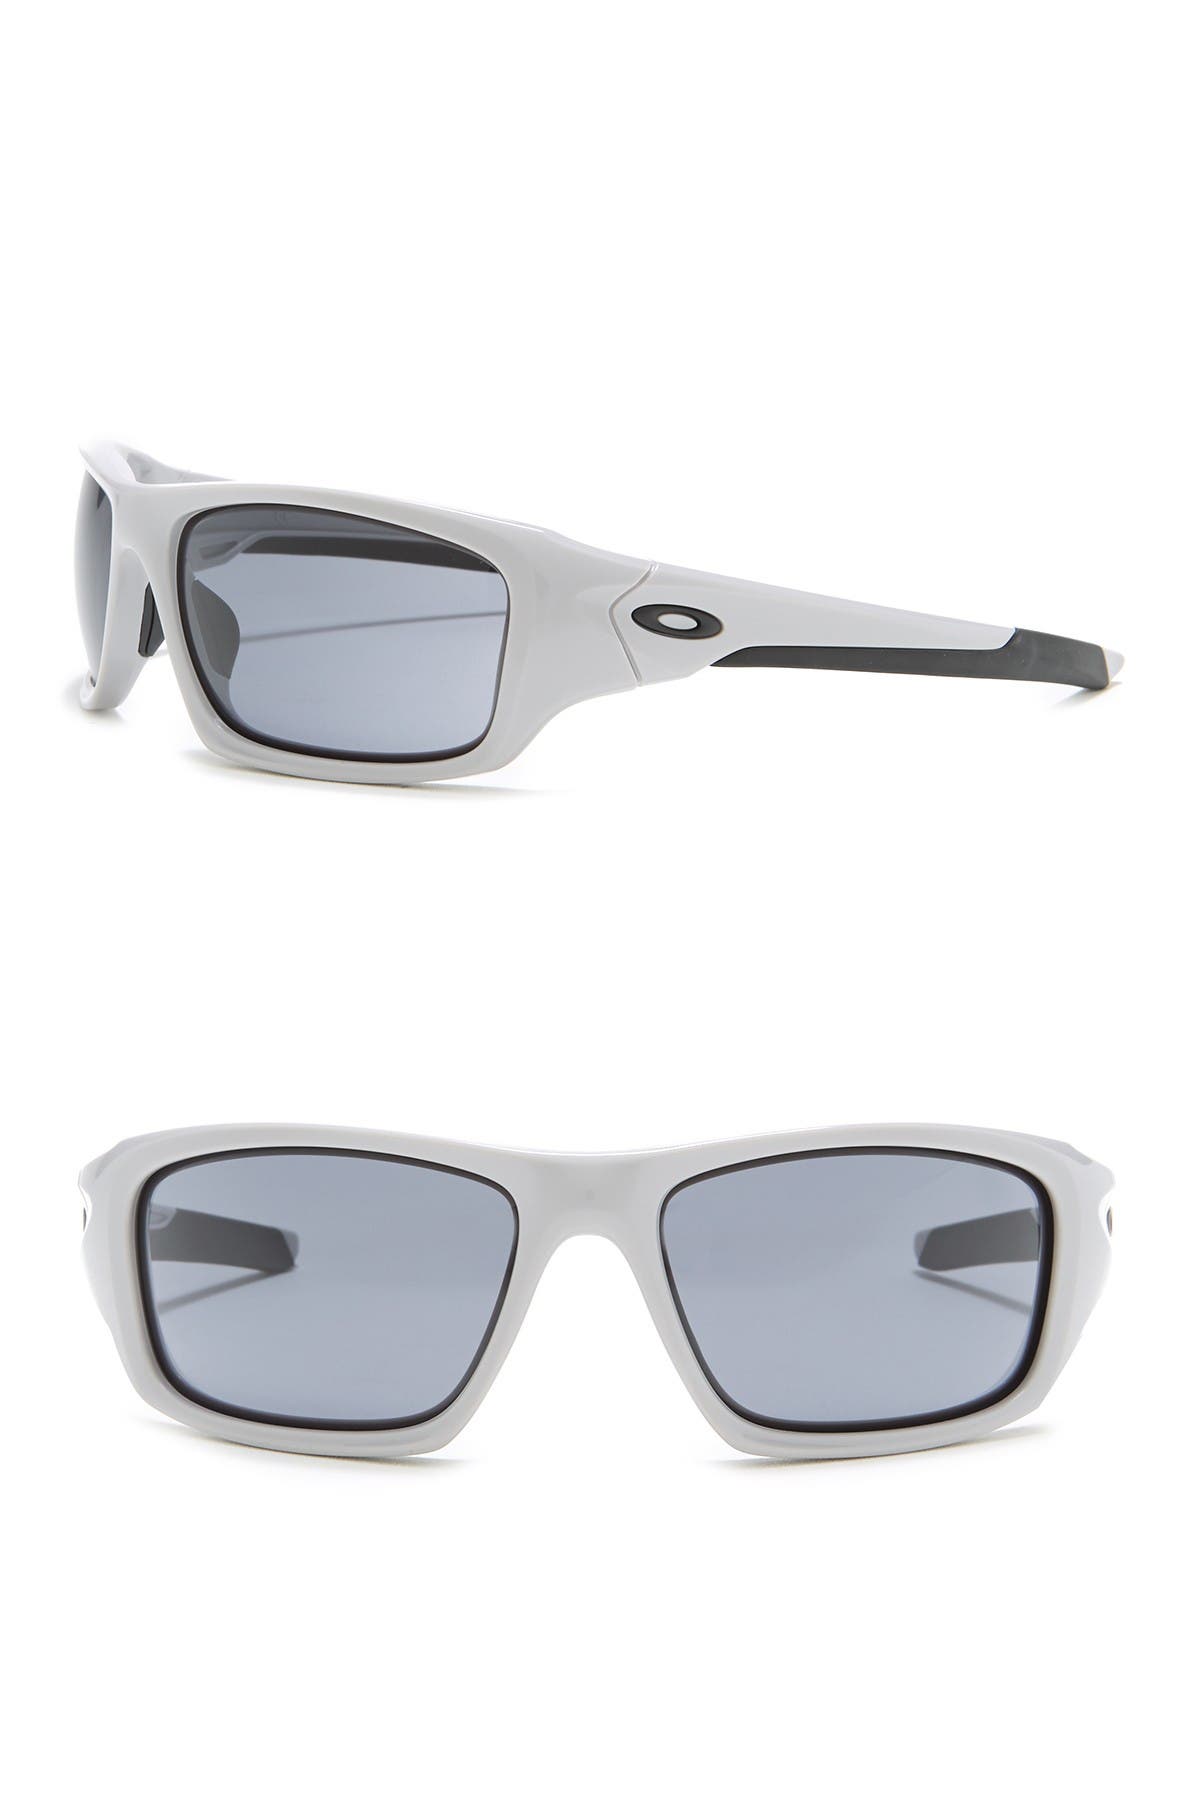 Oakley | 60mm Valve Wrap Sunglasses 